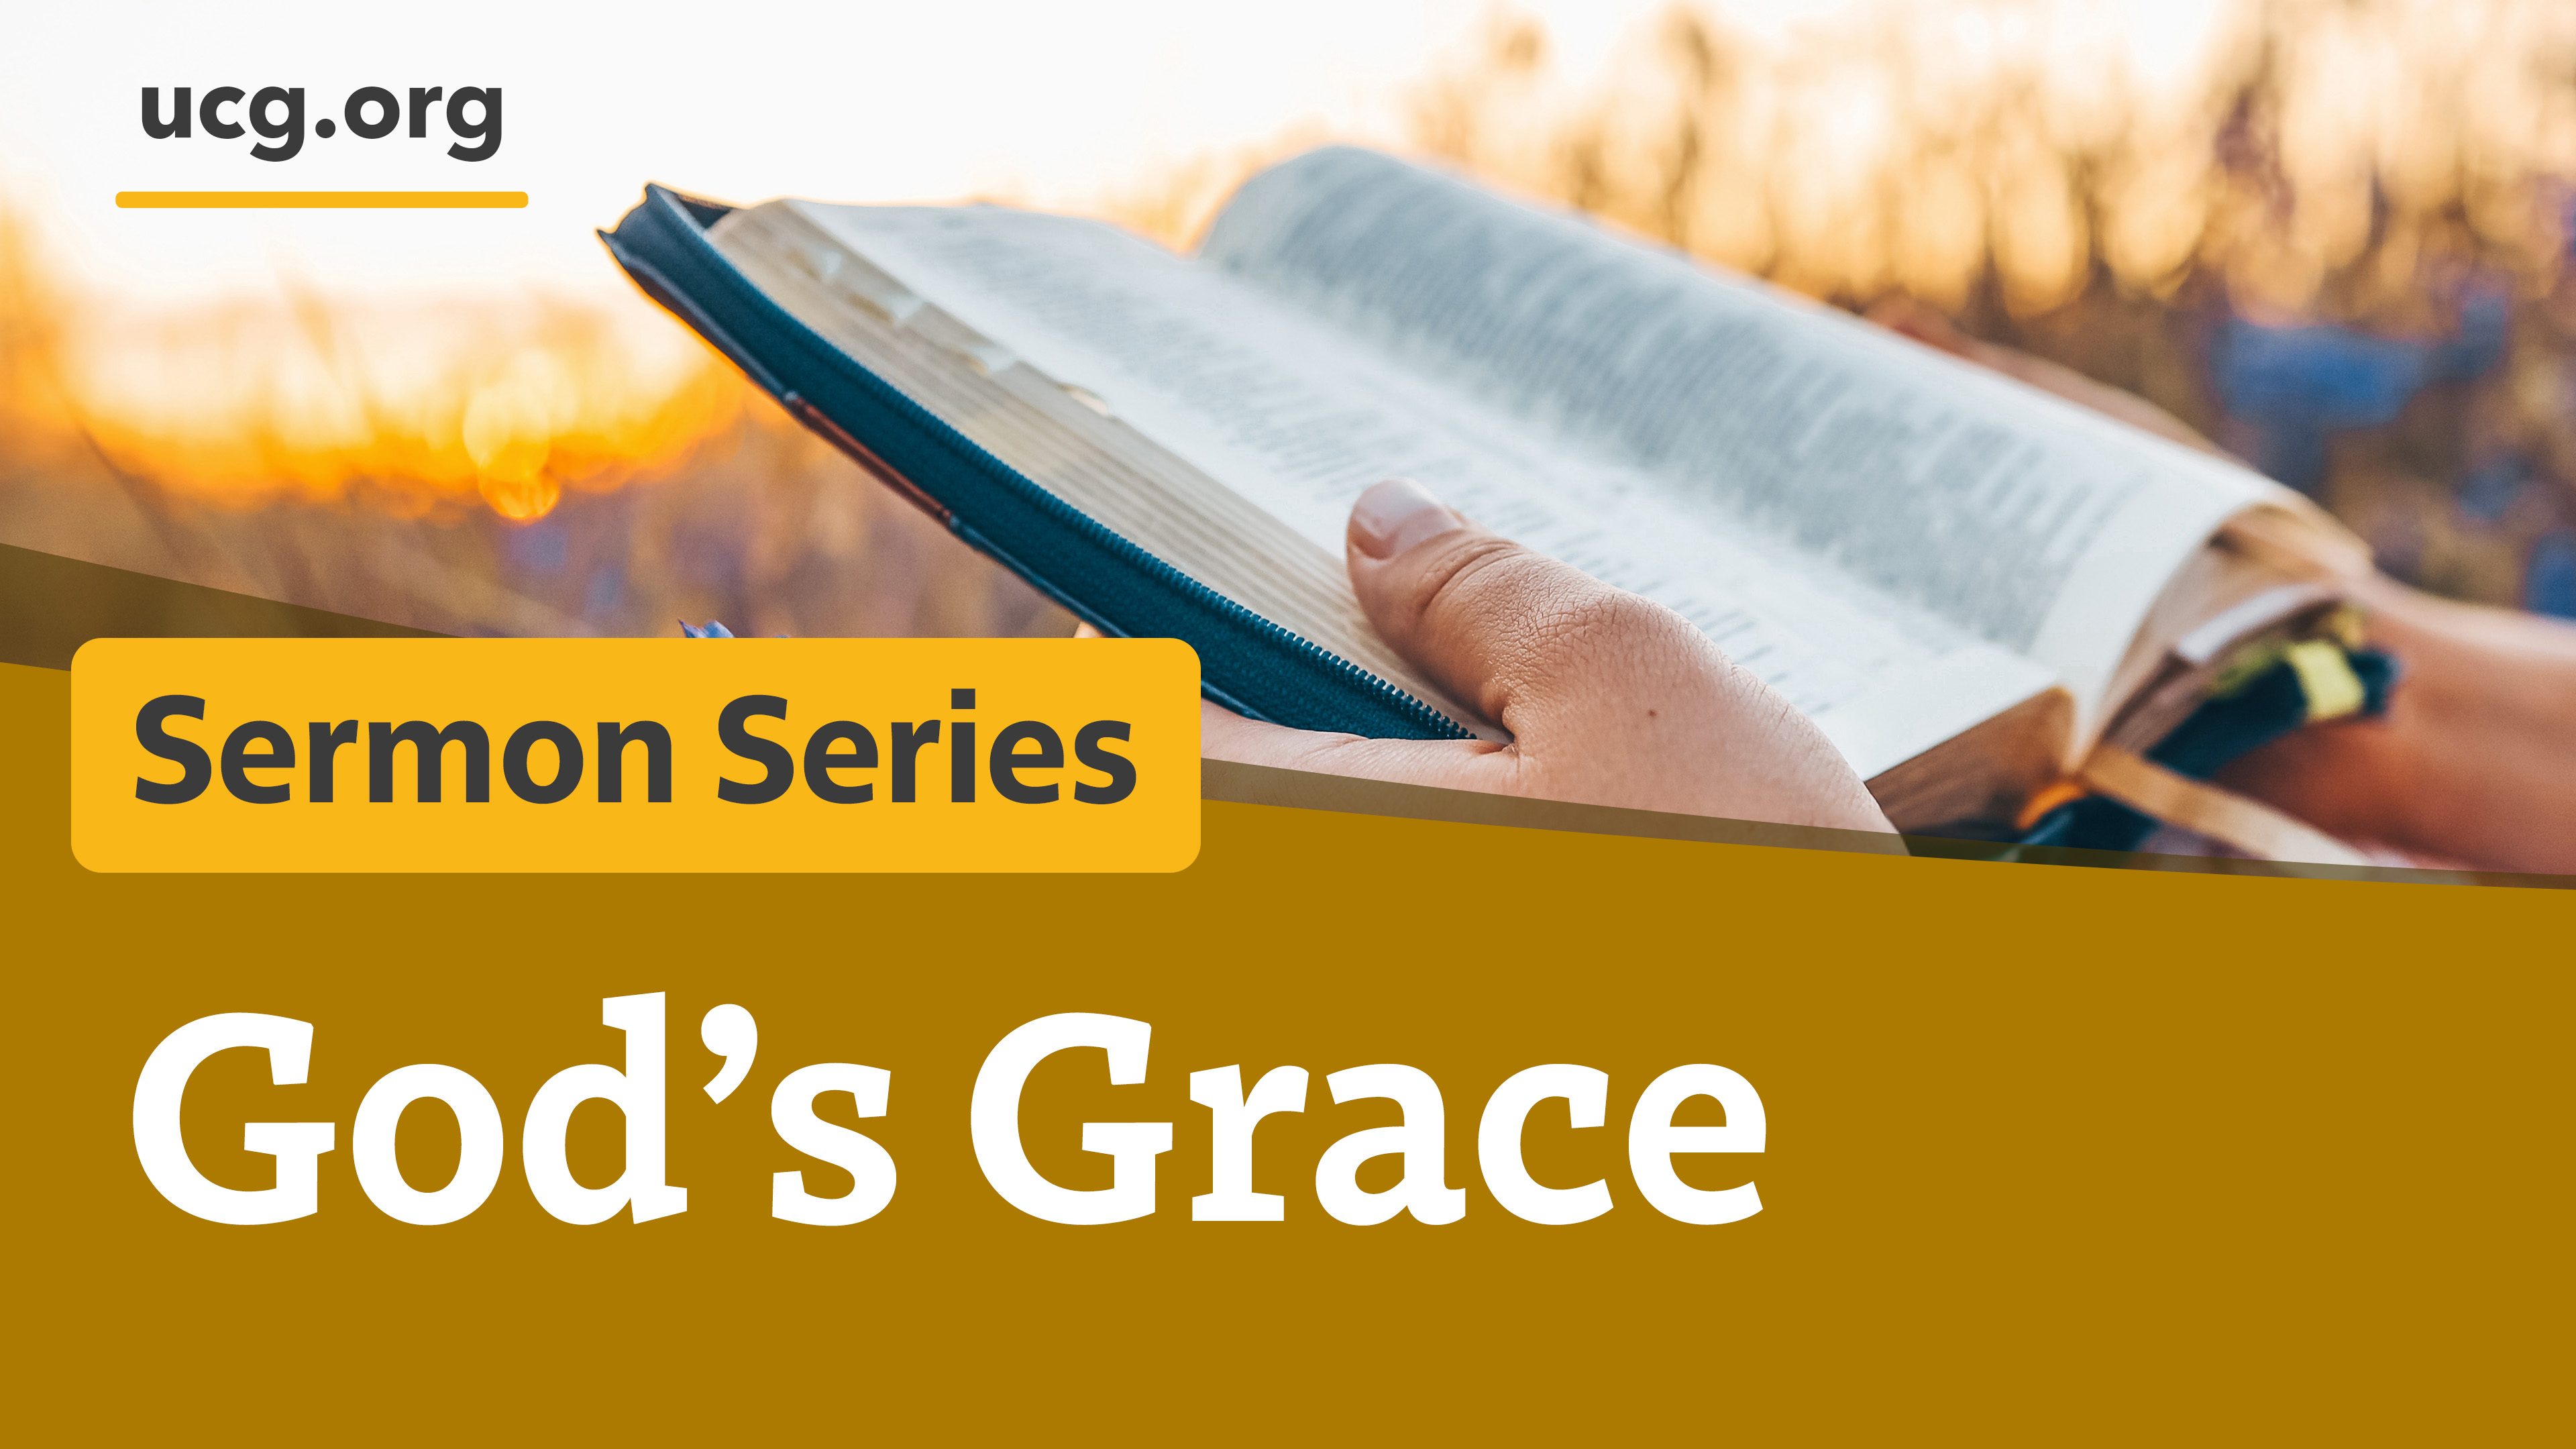 God's Grace series